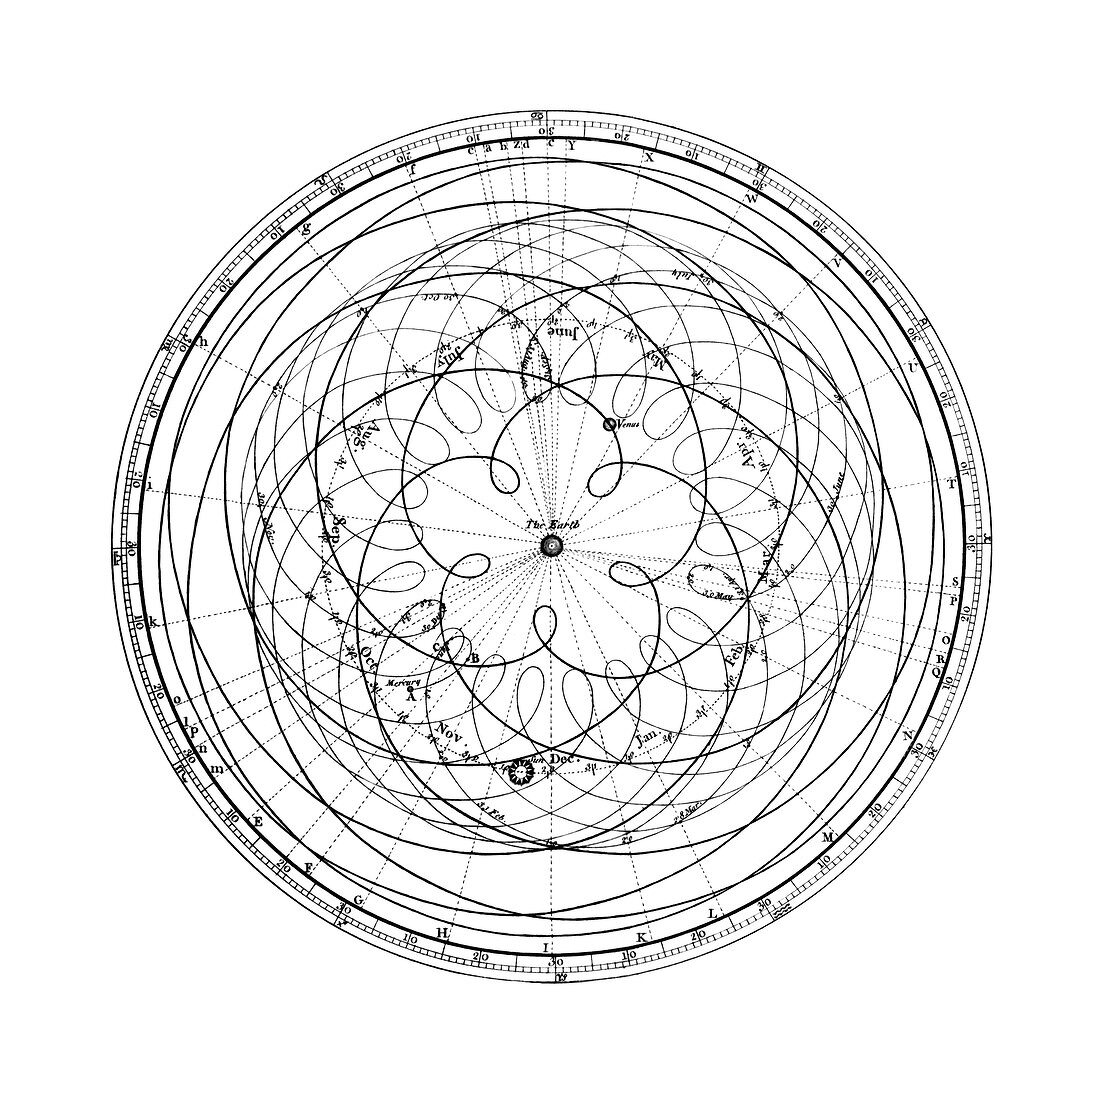 Ferguson's epicyclic diagram,1756